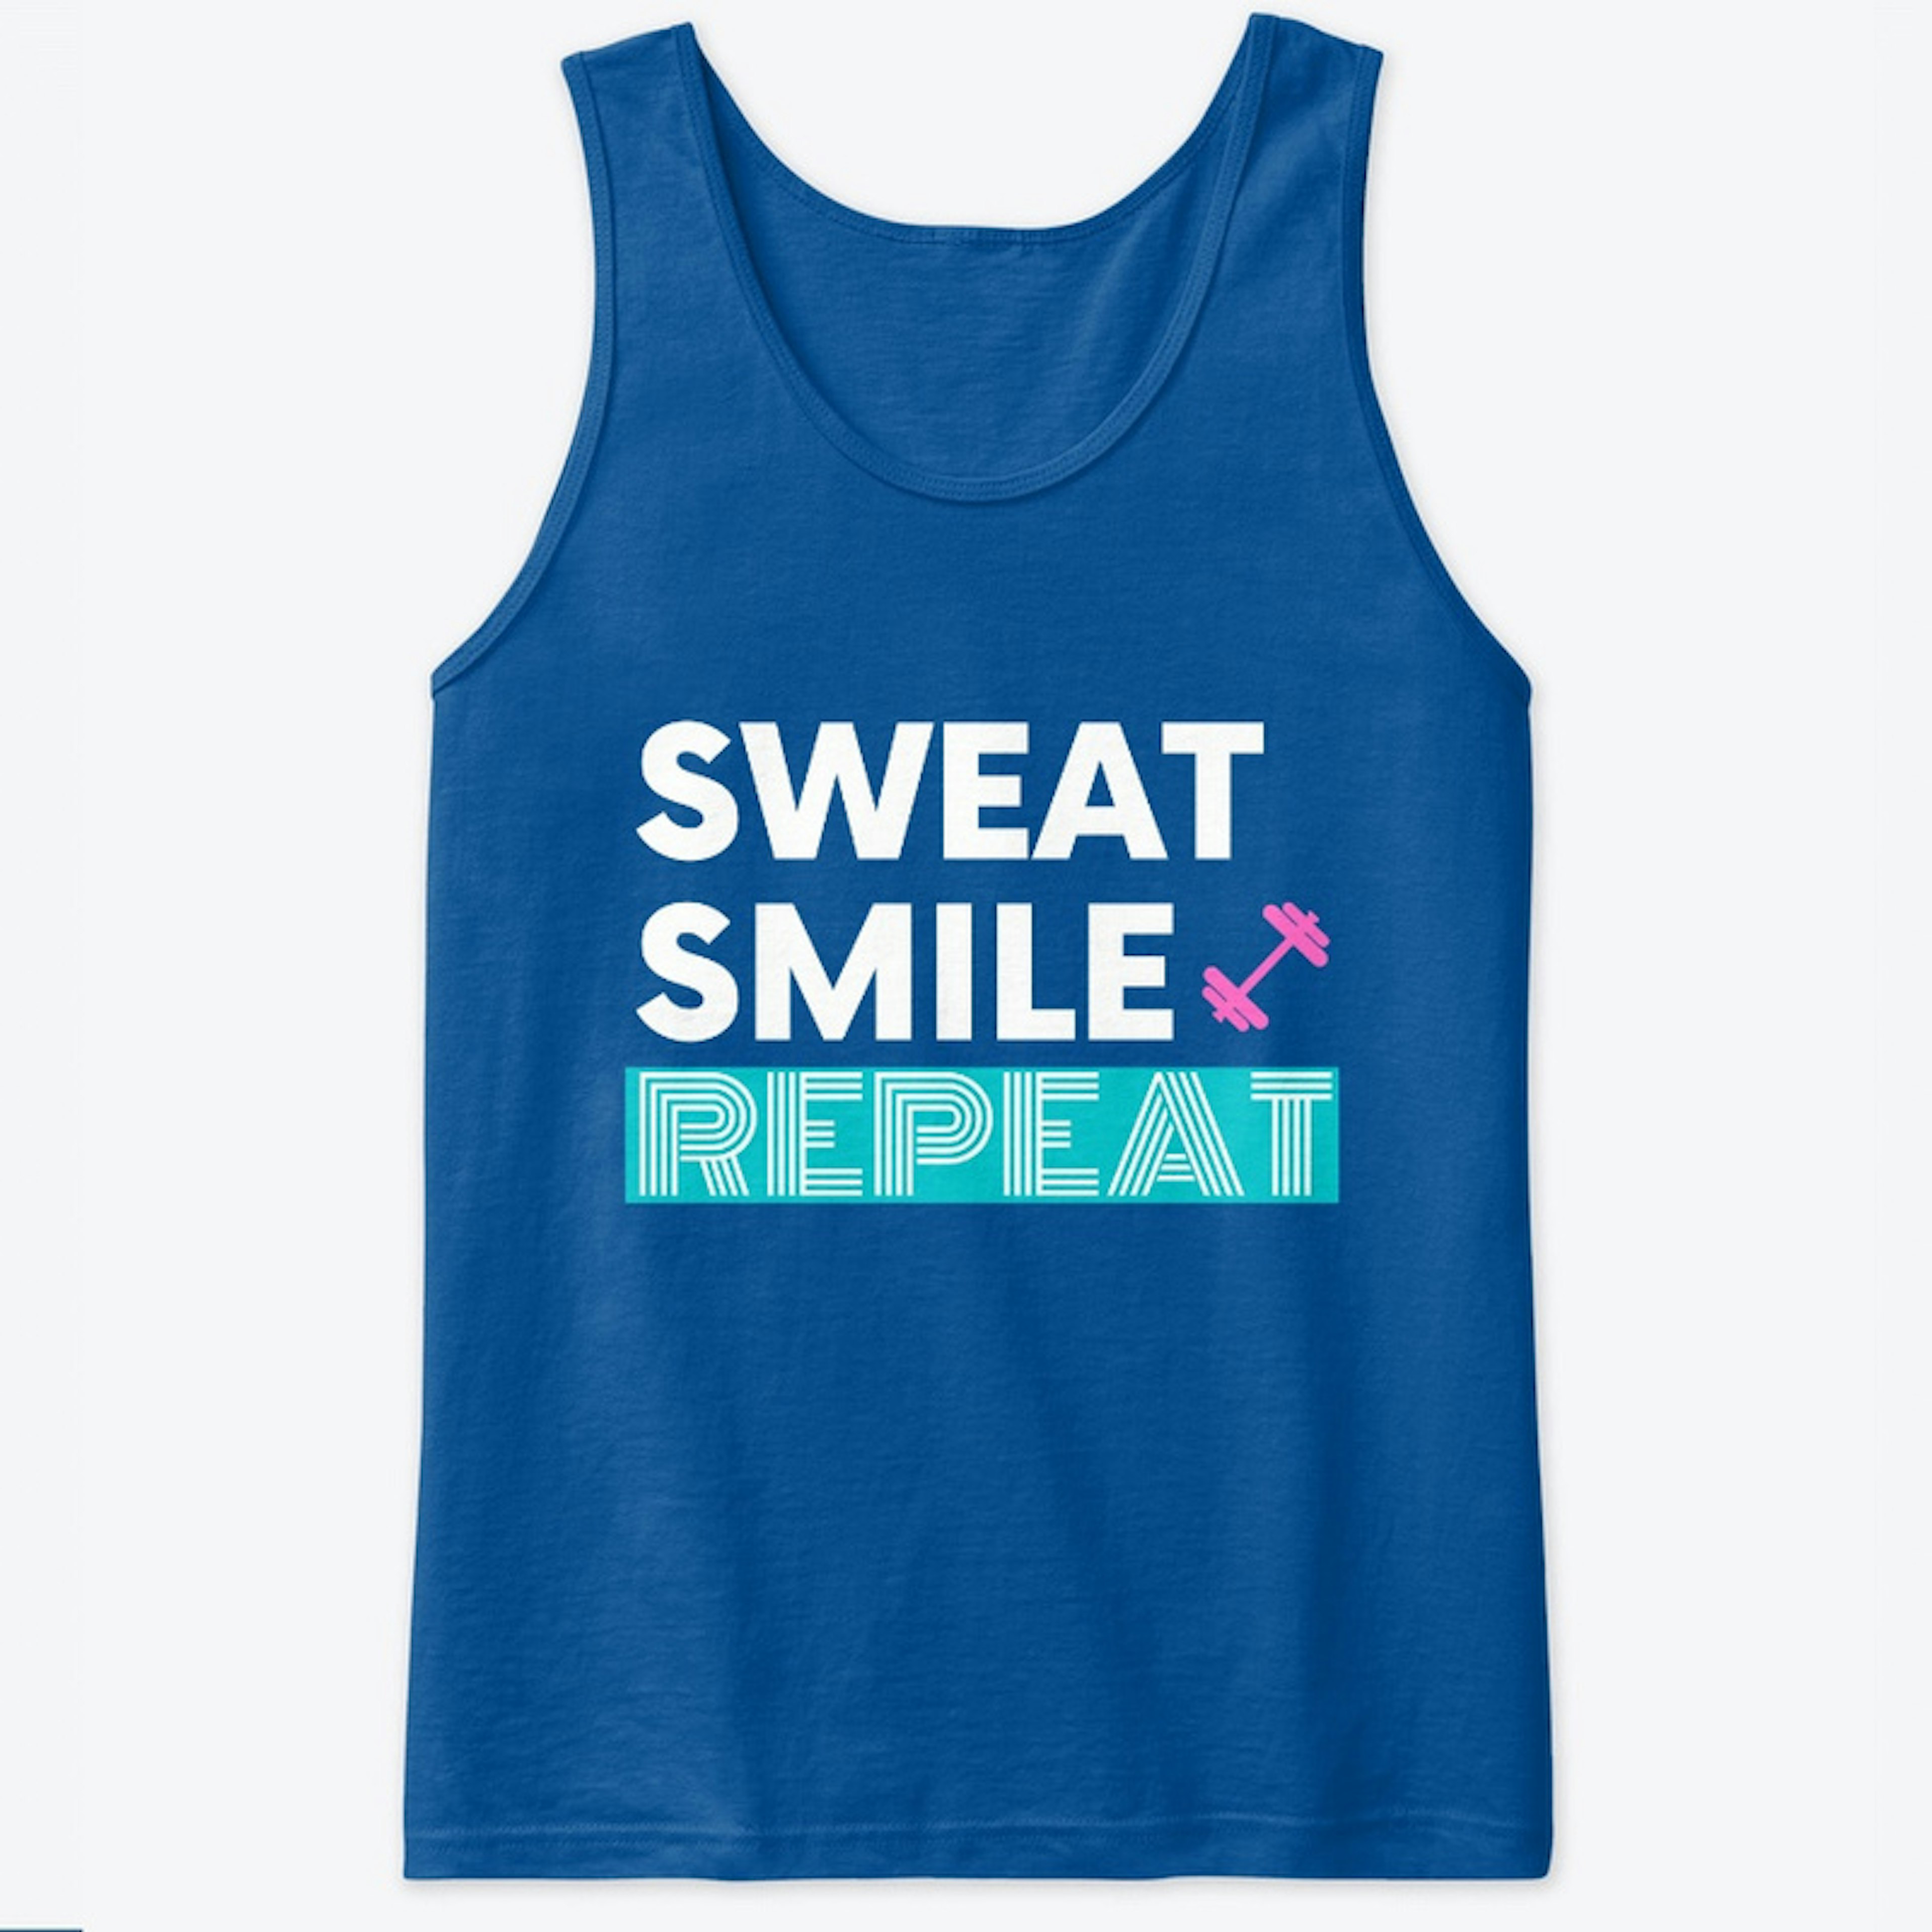 Sweat. Smile. Repeat!